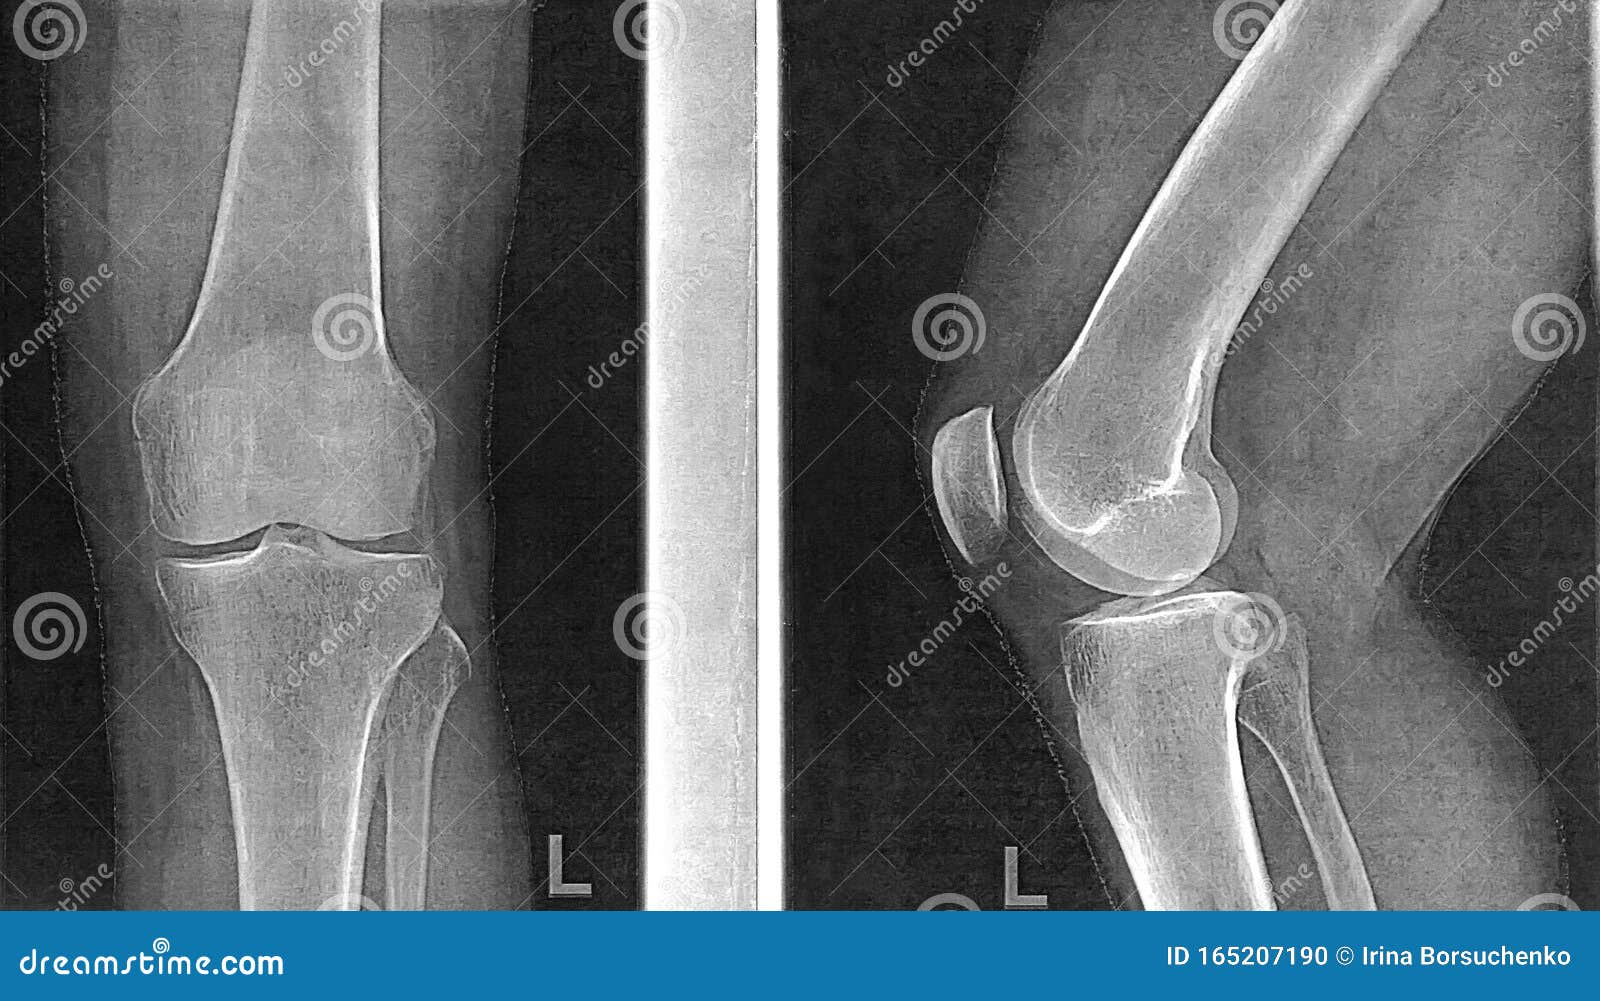 Рентген колена. Коленный сустав в 2 проекциях рентген. Рентген здорового коленного сустава в двух проекциях. Рентгенография коленного сустава (2 проекции). Рентген коленного сустава боковая проекция гонартроз.